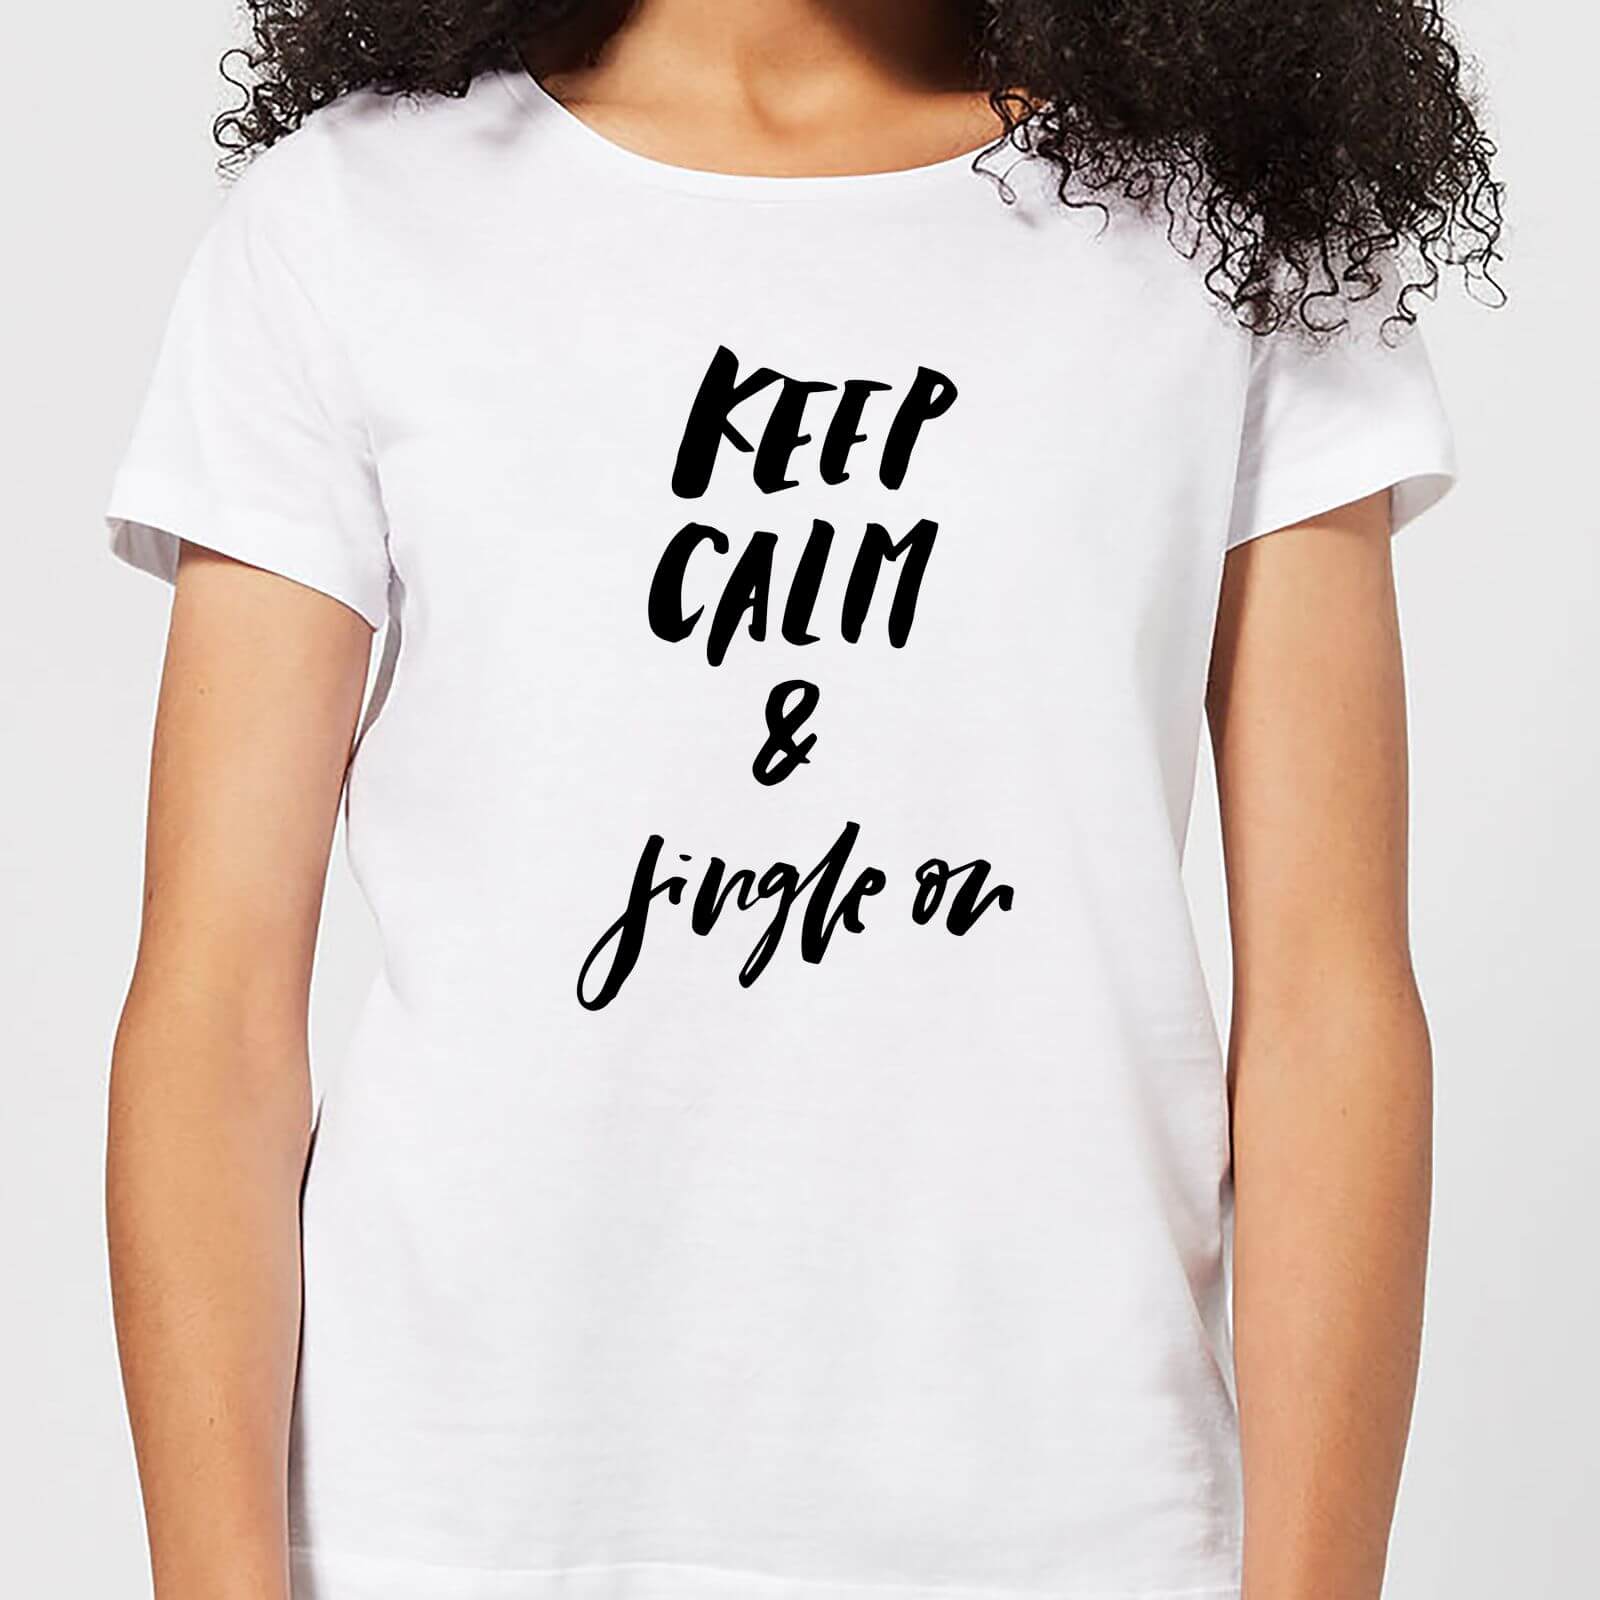 Keep Calm and Jingle On Women's T-Shirt - White - S - White